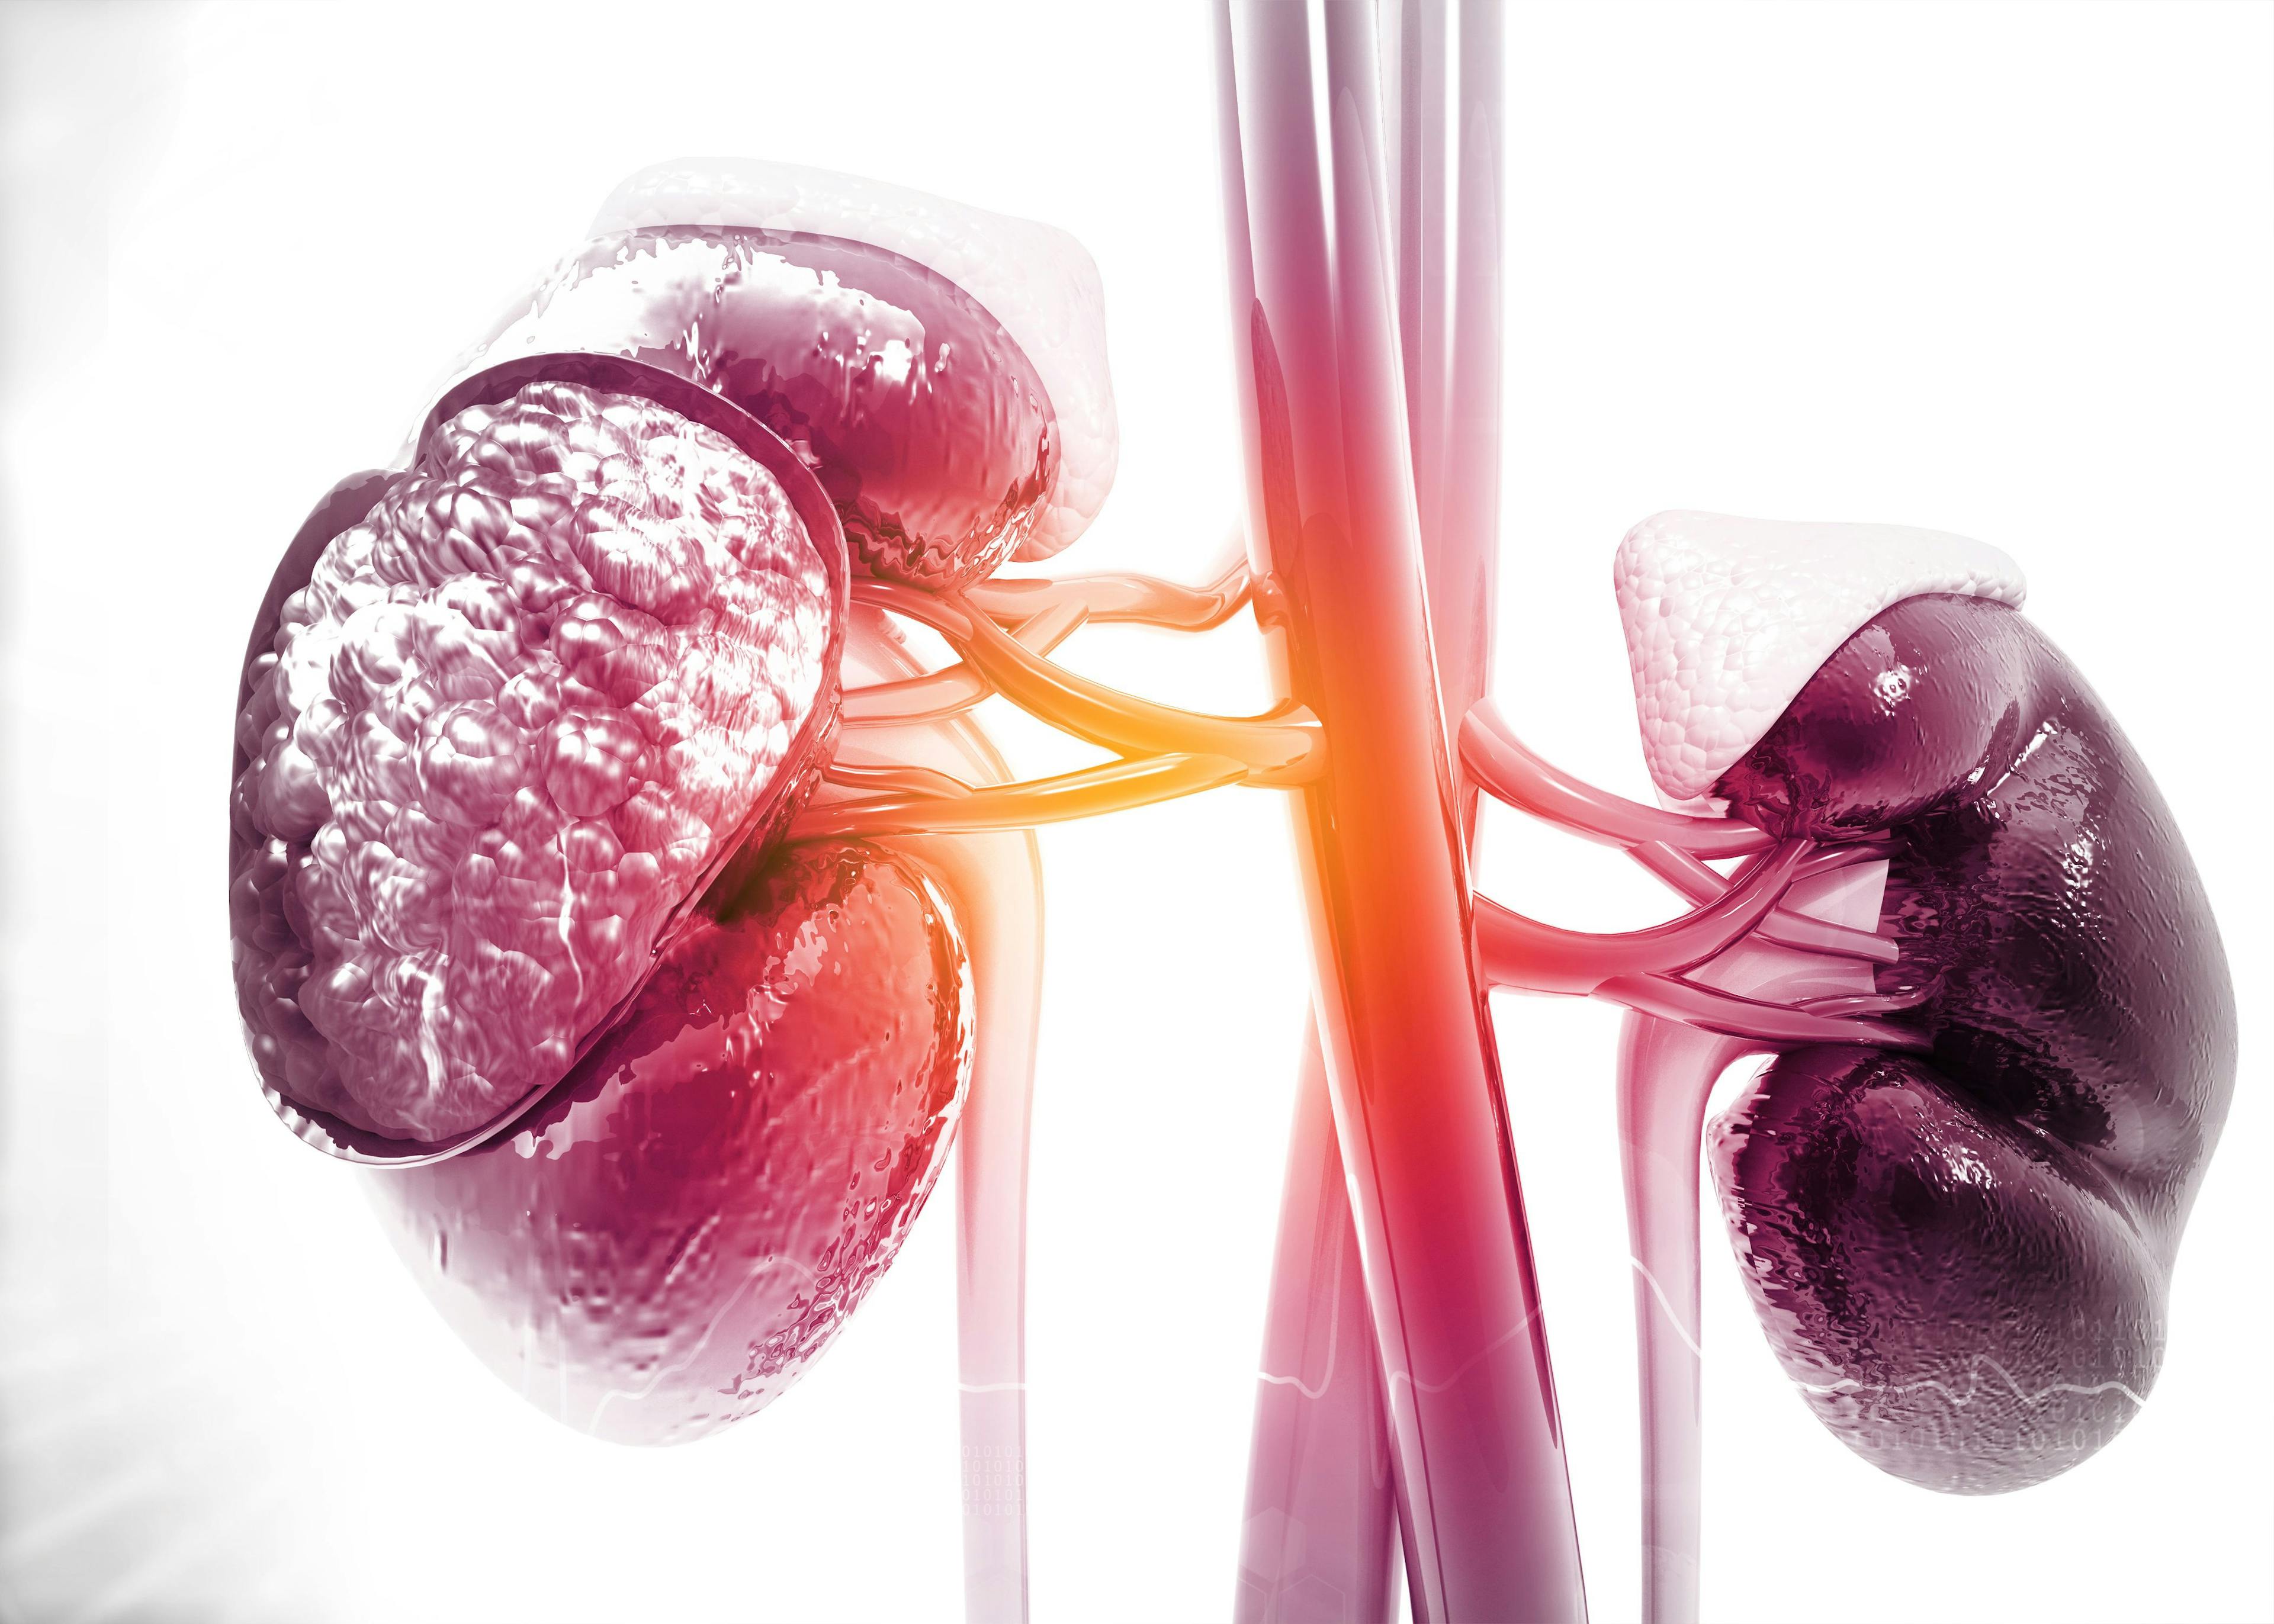 Diseased human kidney on science background. 3d illustration | Image Credit: Rasi - stock.adobe.com